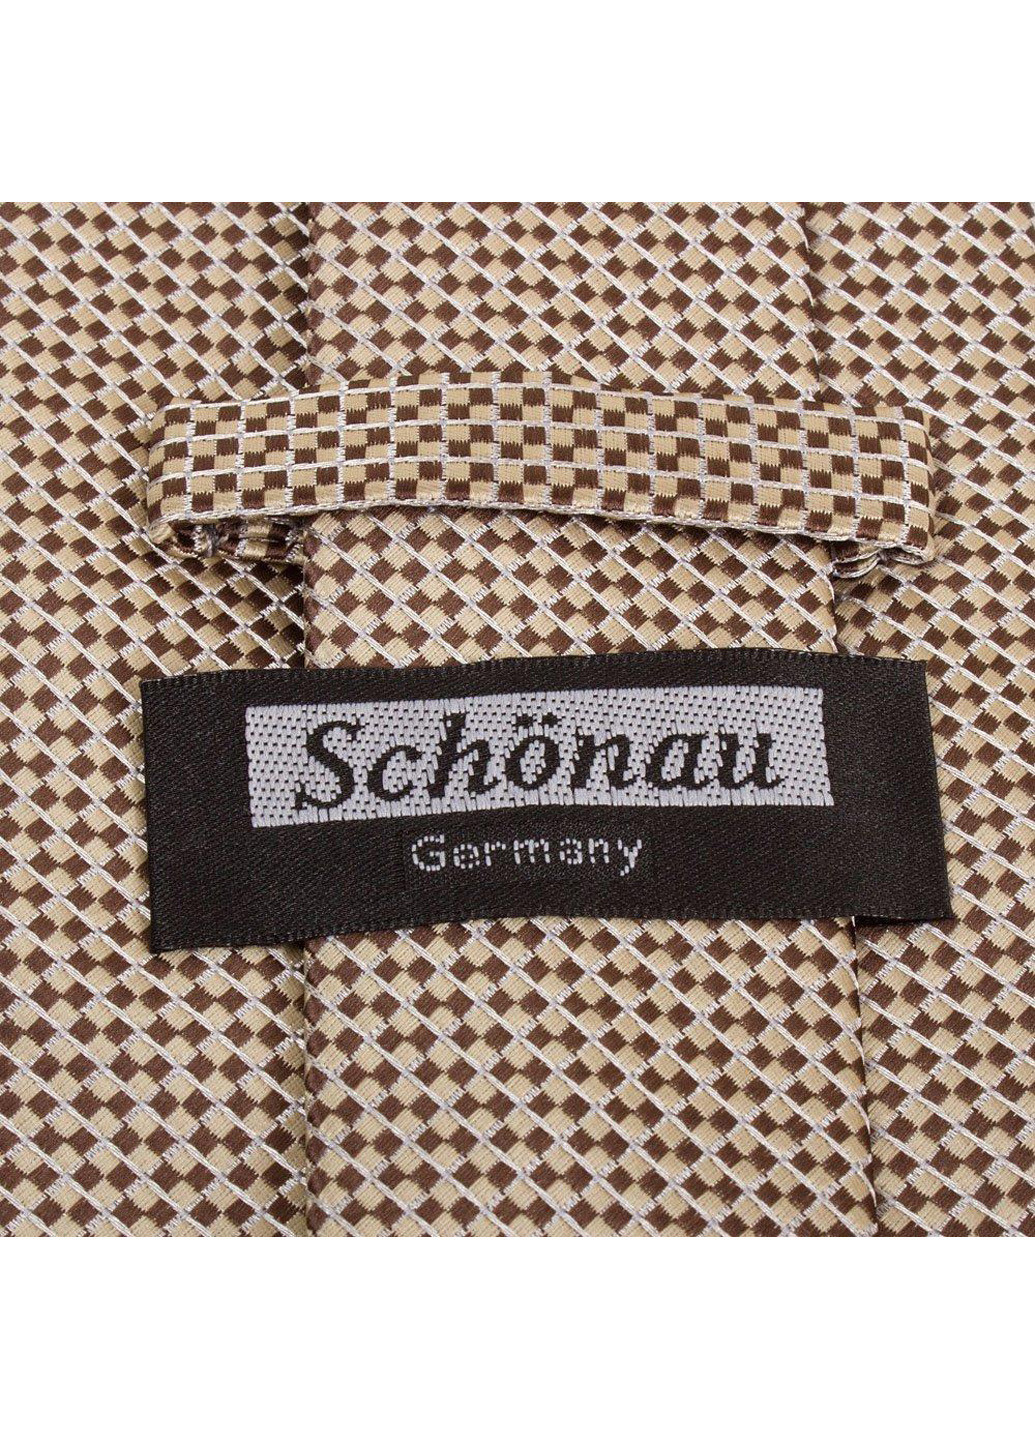 Мужской галстук 148,5 см Schonau & Houcken (195547000)